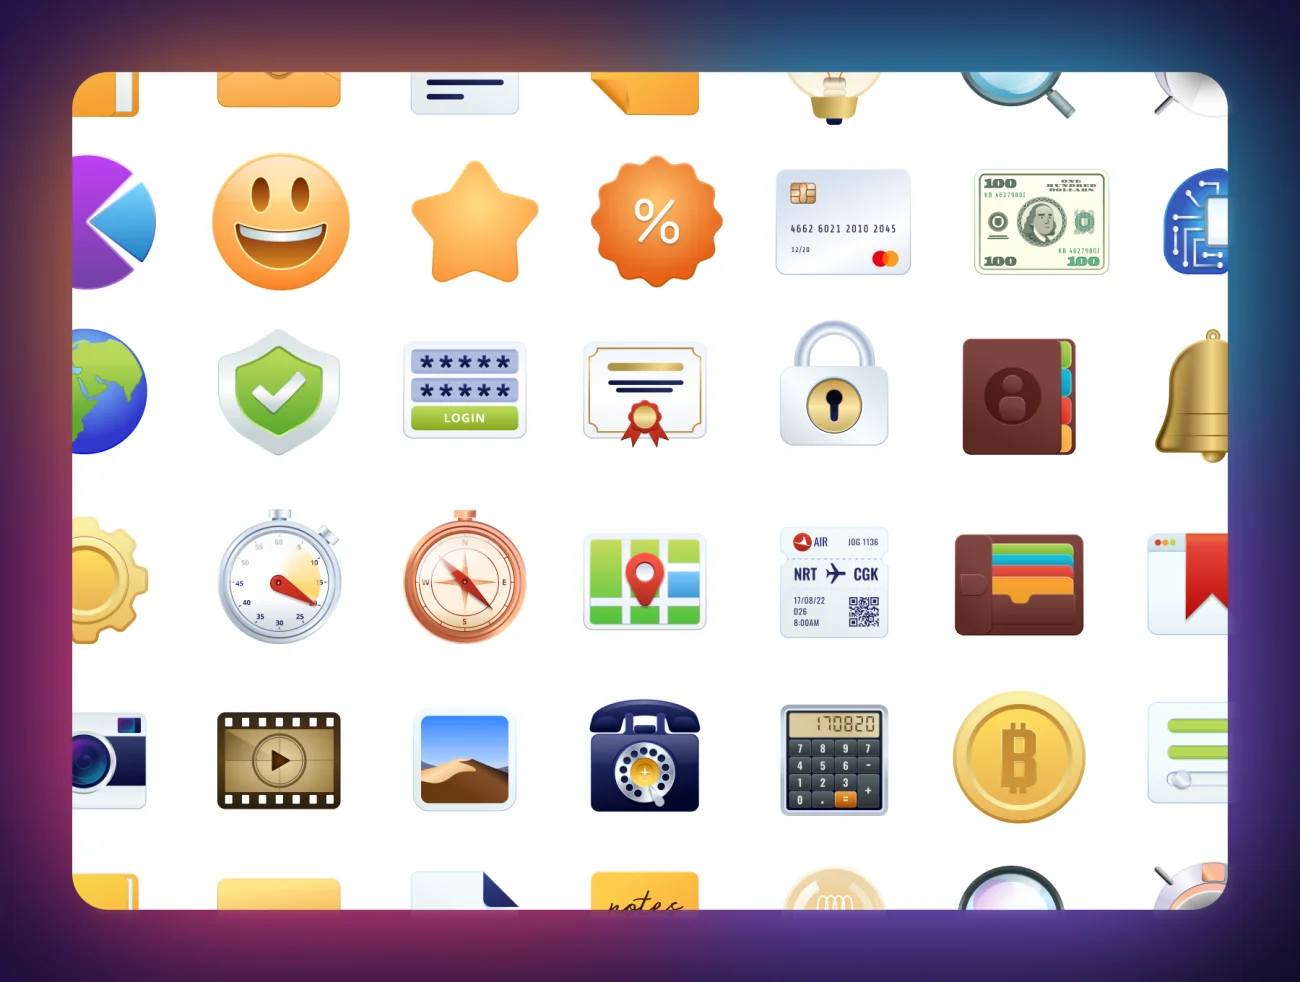 Icono Big sur themes icon set 70个macOS碧圣新版系统拟物风格主题风格图标集-3D/图标-到位啦UI